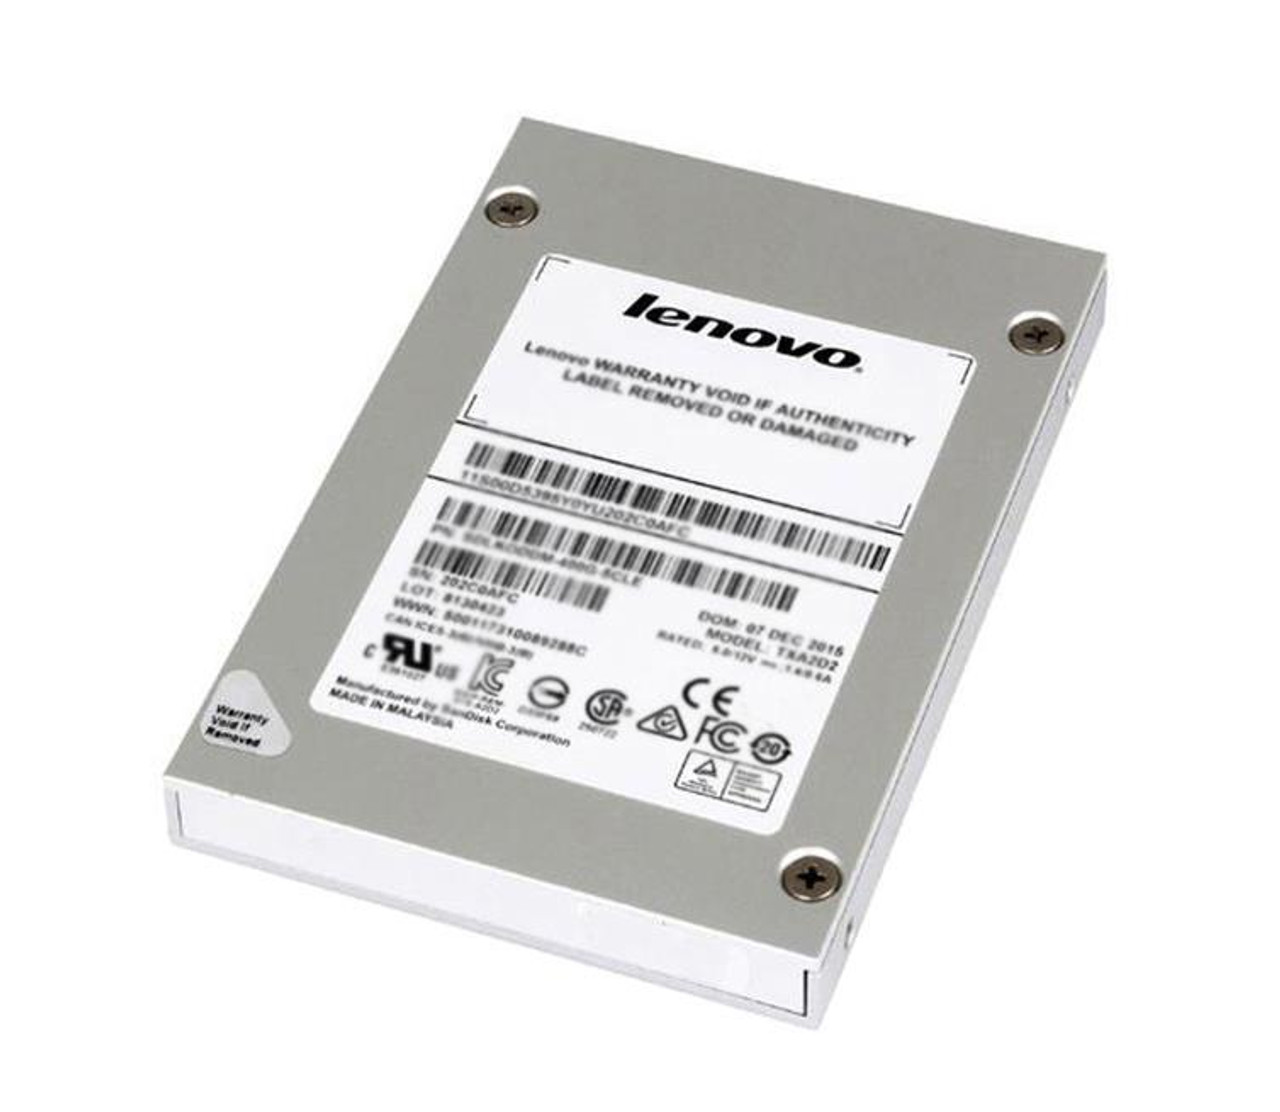 00YK216 Lenovo 480GB MLC SATA 6Gbps Enterprise Hot Swap Mainstream Endurance 2.5-inch Internal Solid State Drive (SSD)